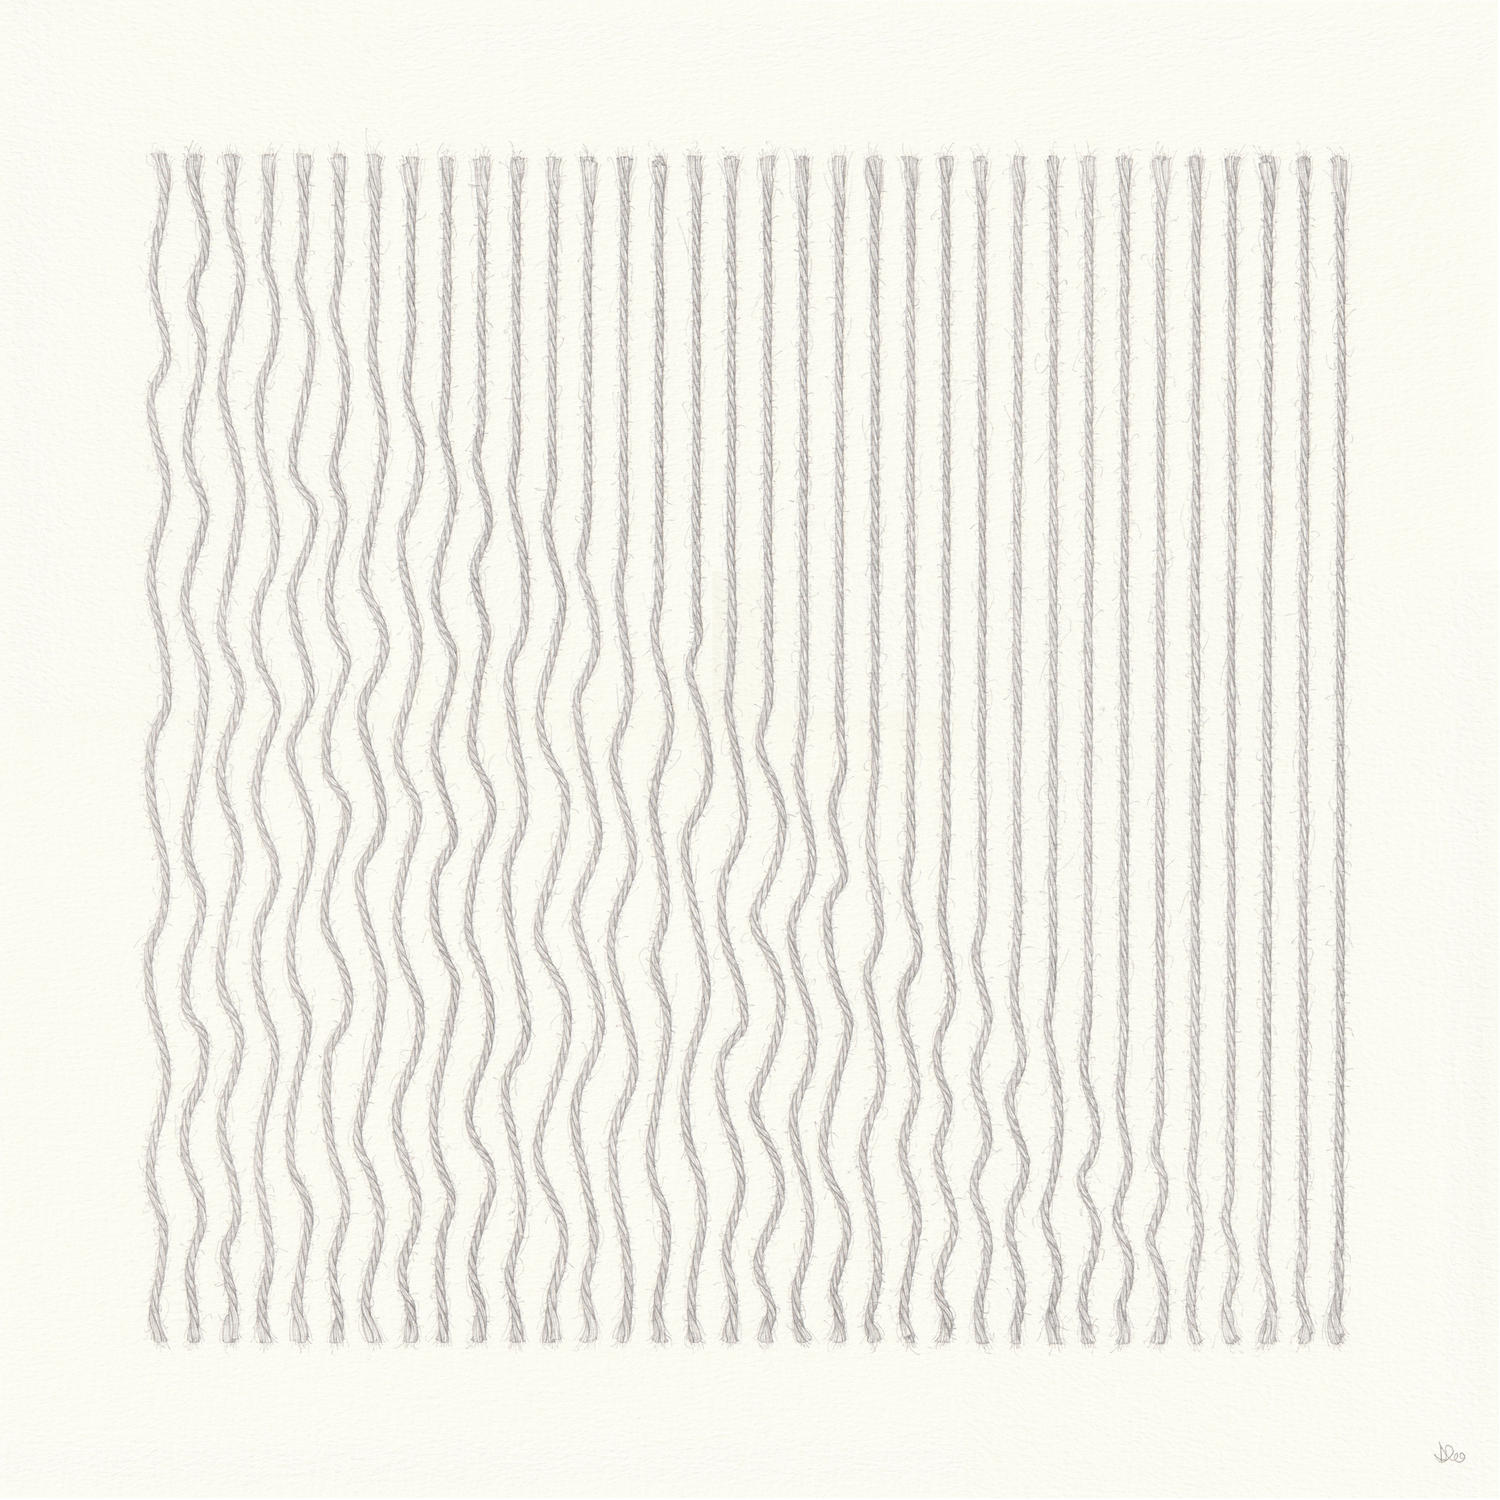 Diagonal Ripple (38 x 38 cm) pencil on paper